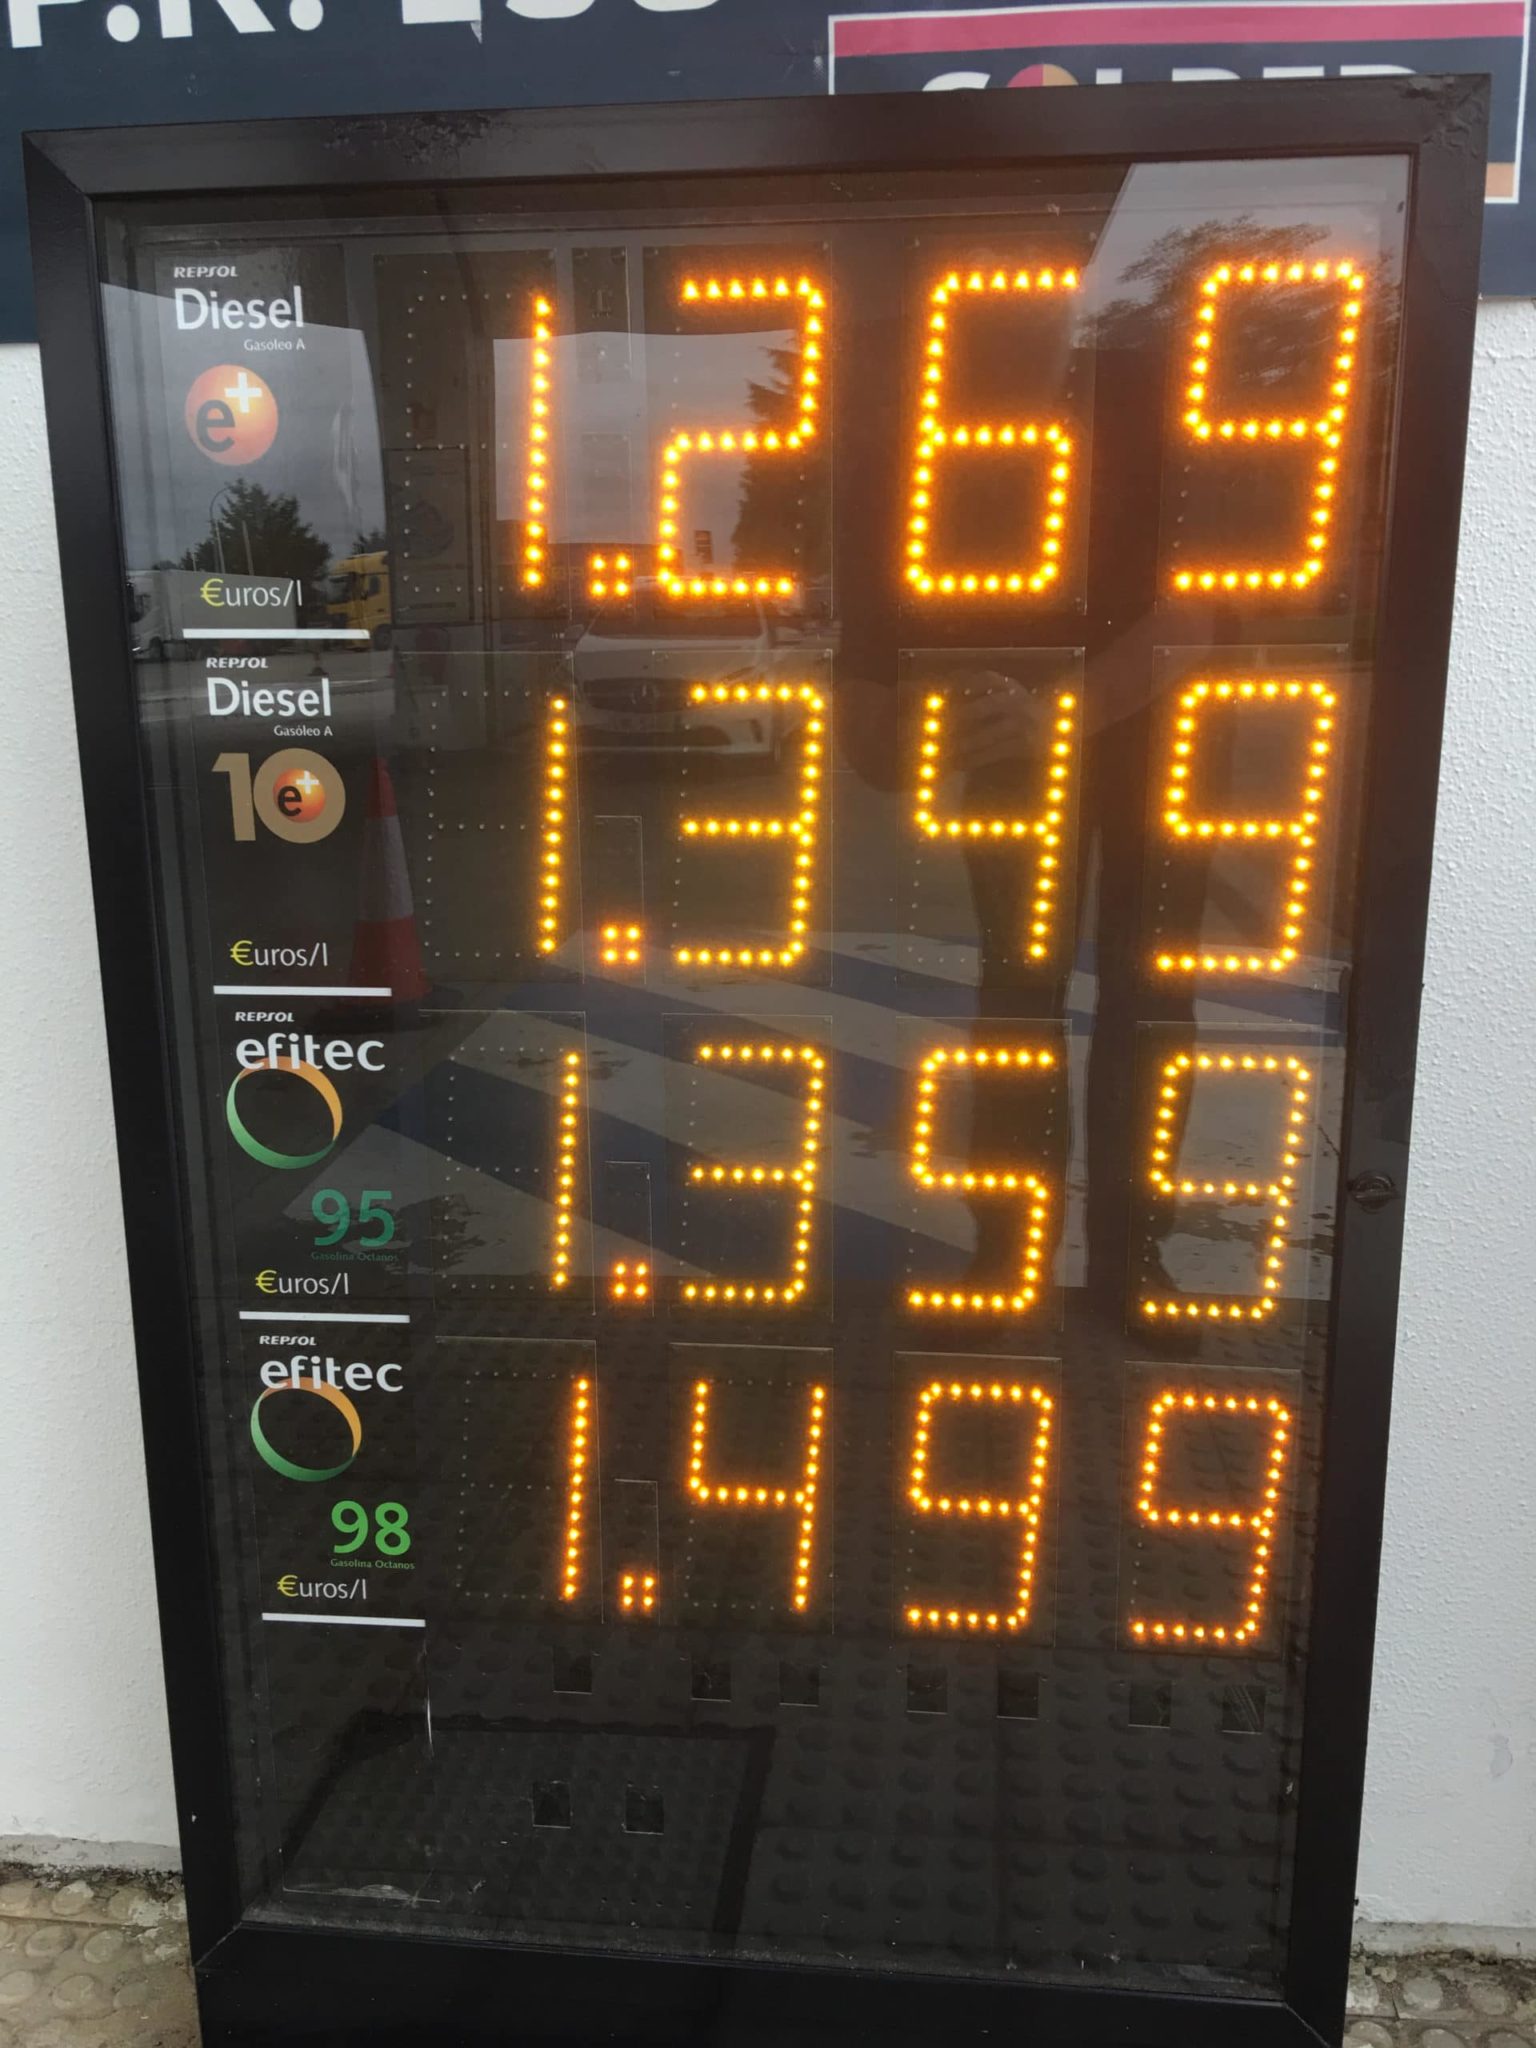 Drivstoff-priser Spania august 2019